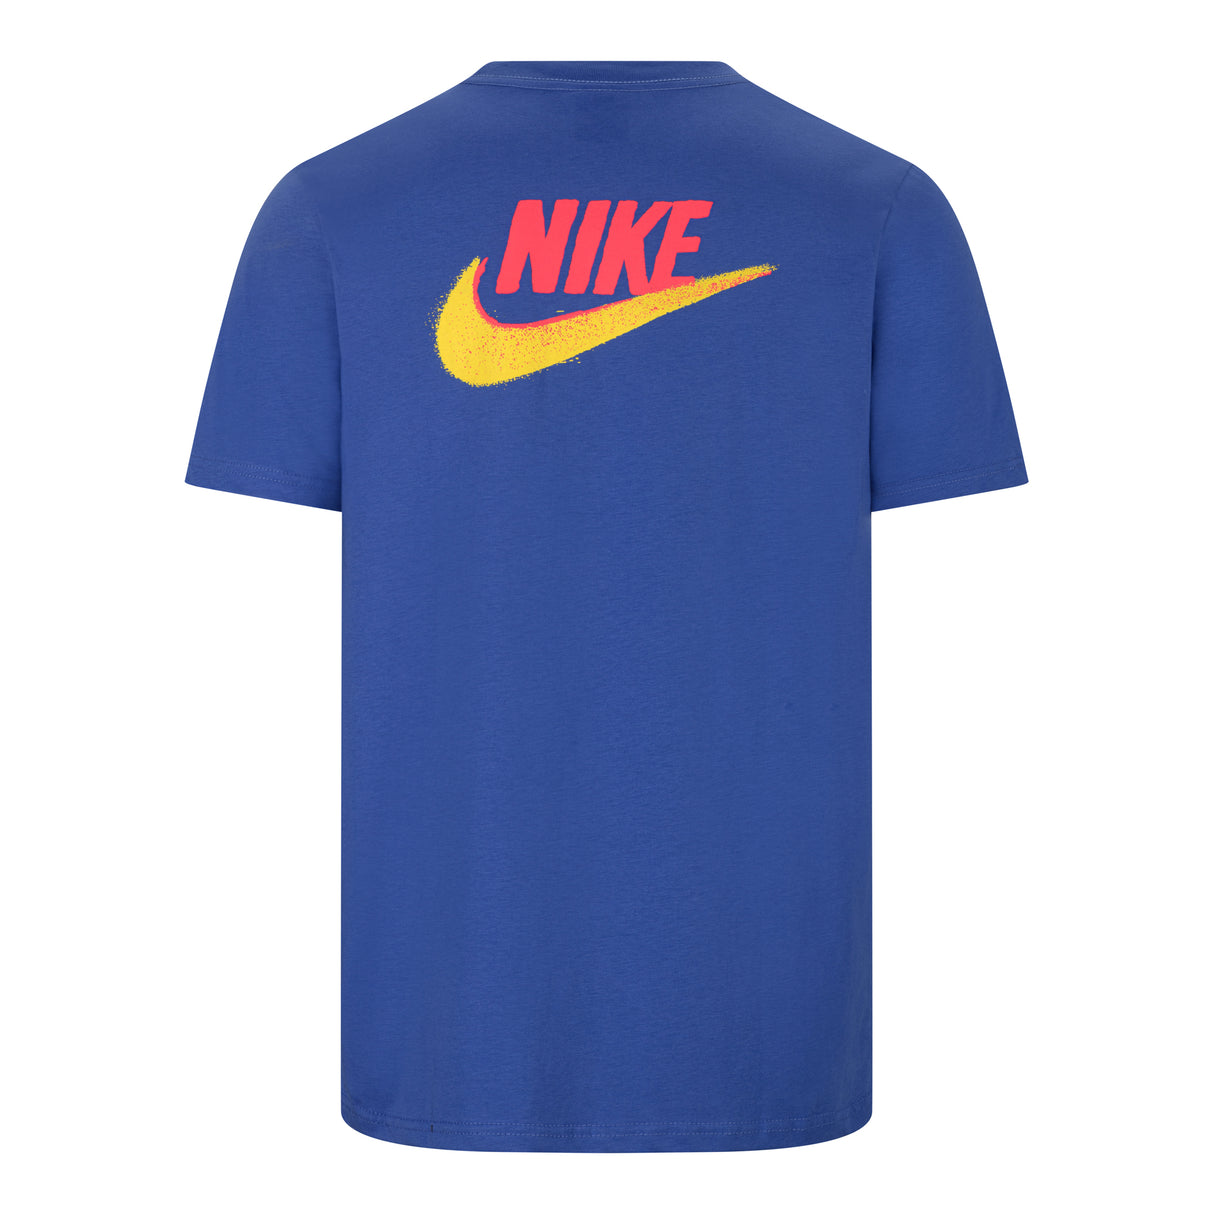 Nike Sportswear Men’s Standard Issue T-Shirt in Game Royal